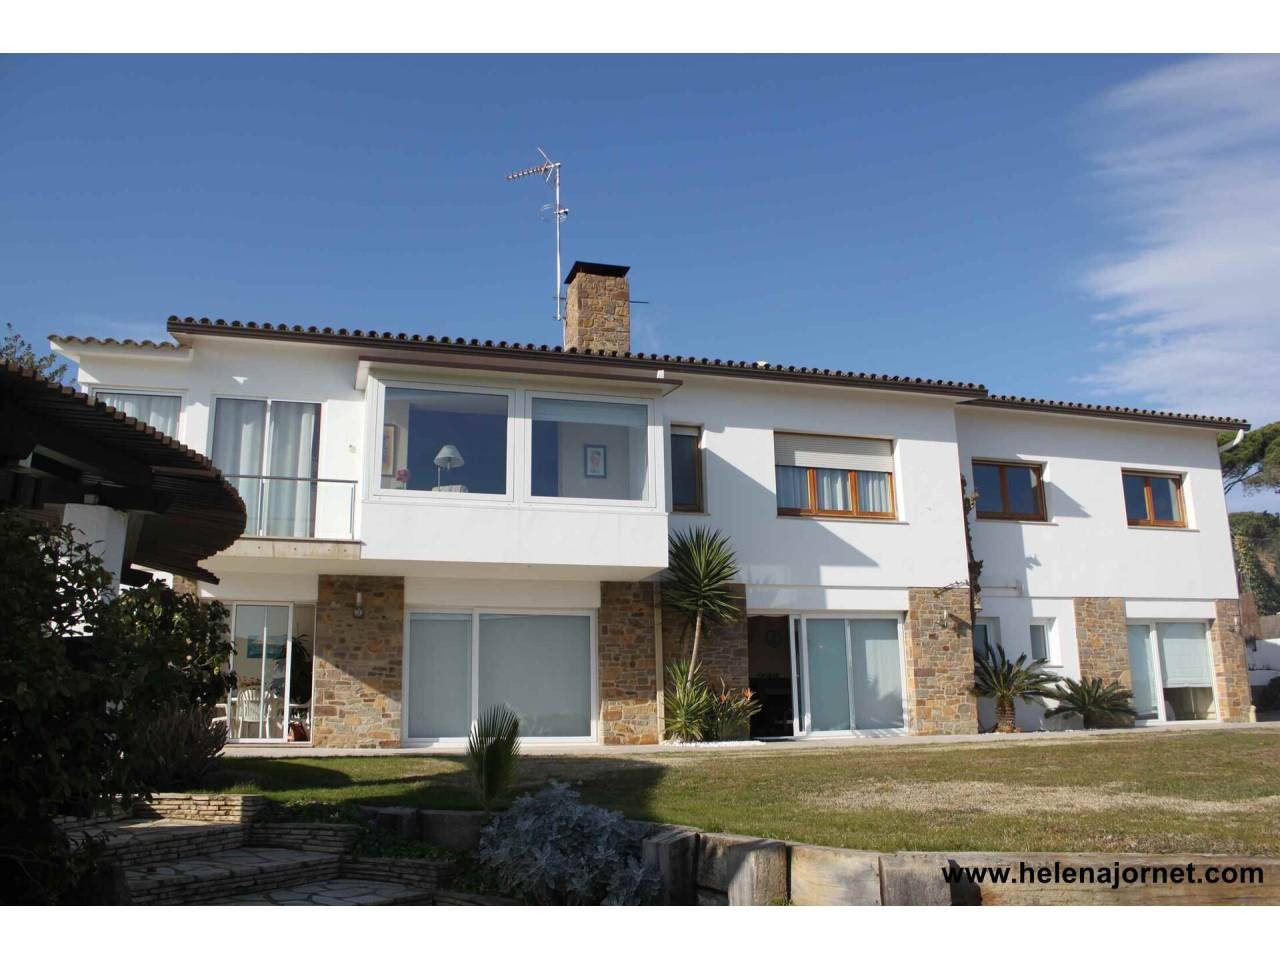 Casa sensacional con vistas espectaculares a la bahía de Sant Pol - 2809